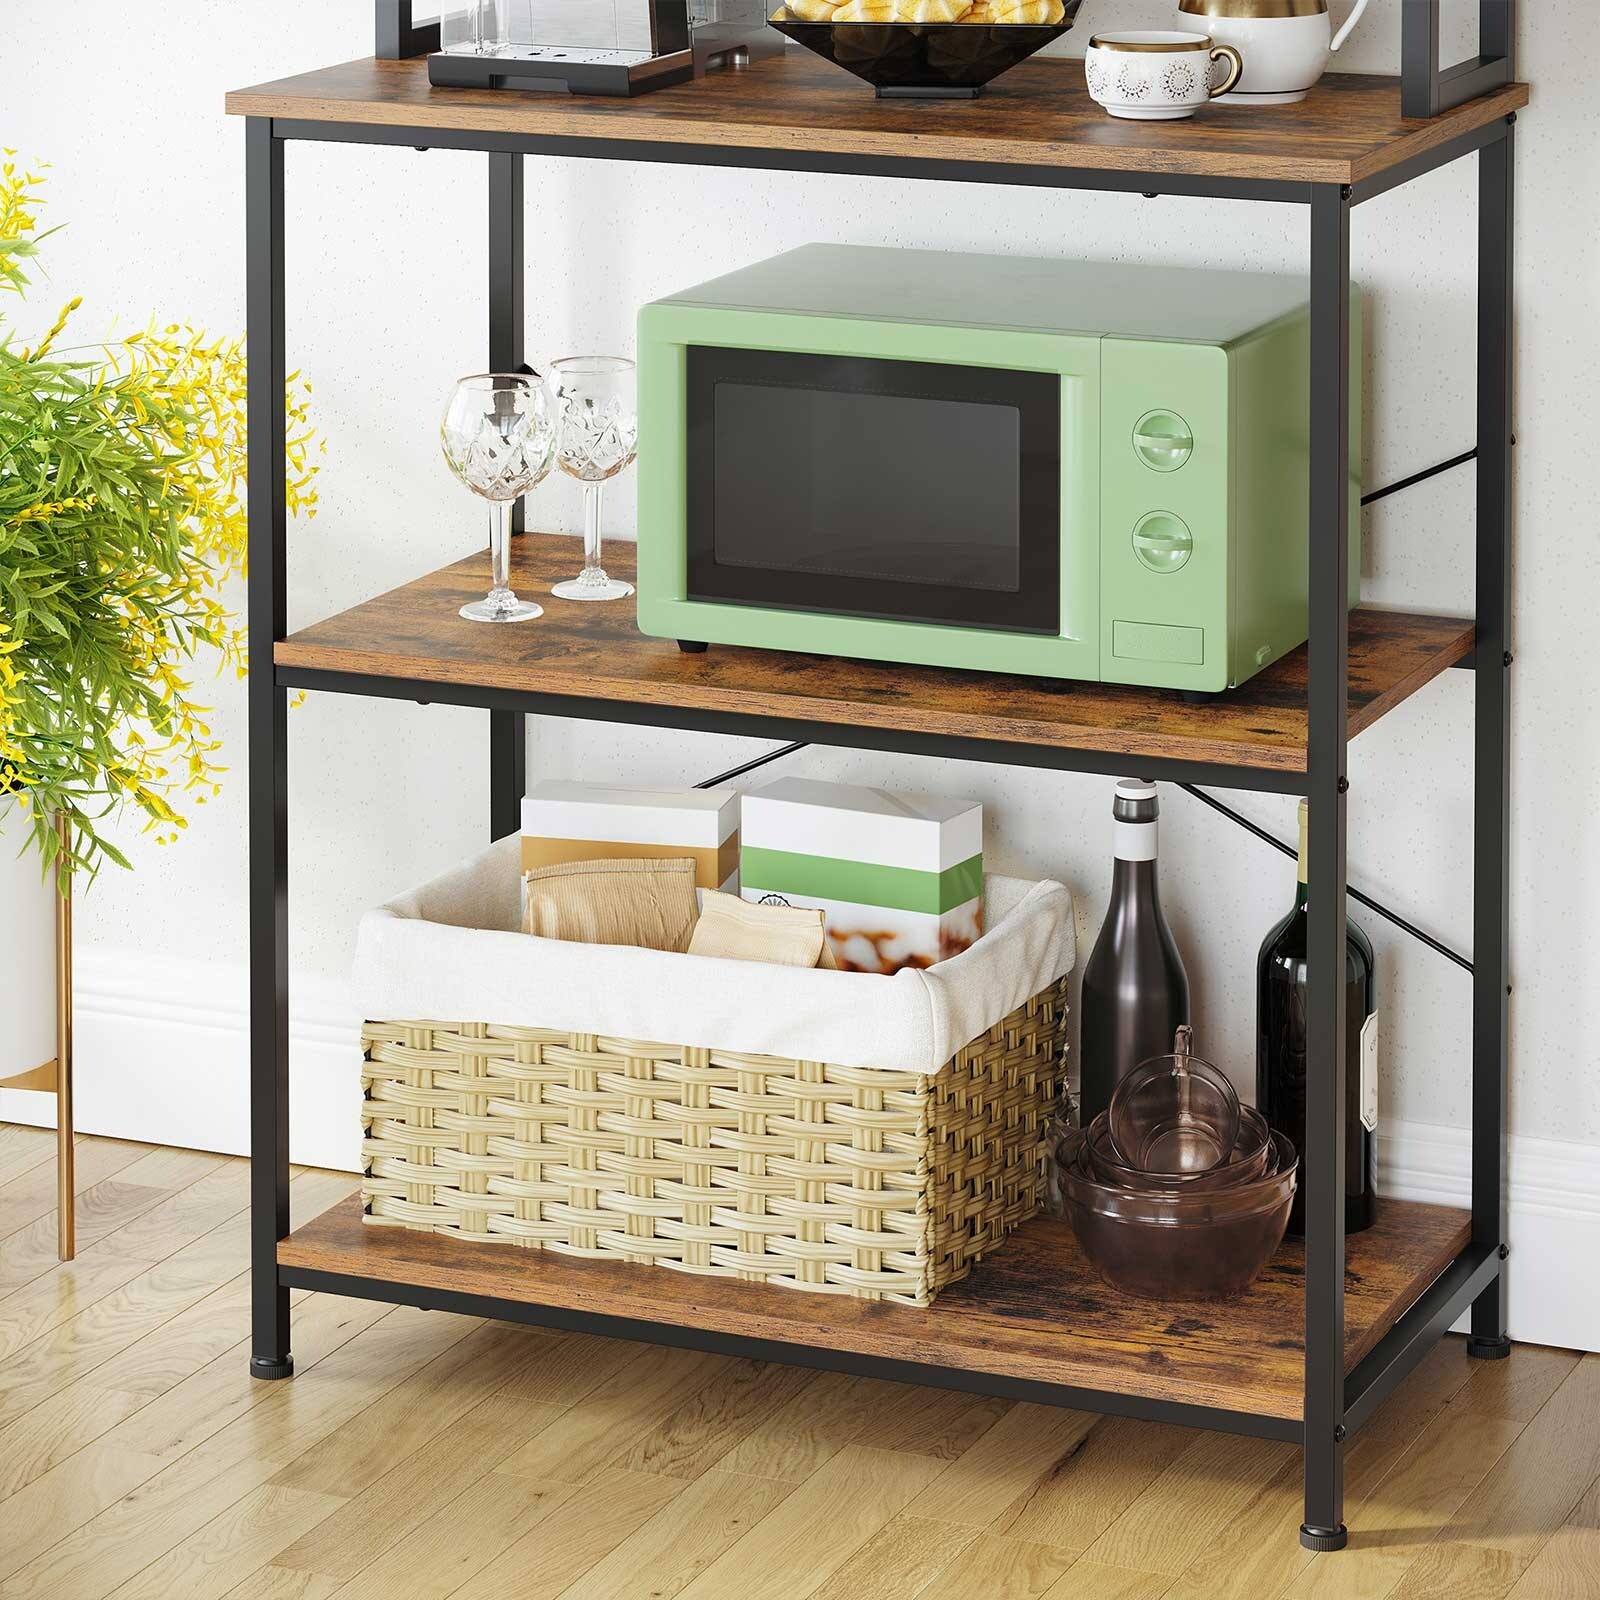 Kitchen Storage Holders Metal Wood Microwave Oven Shelf Stand